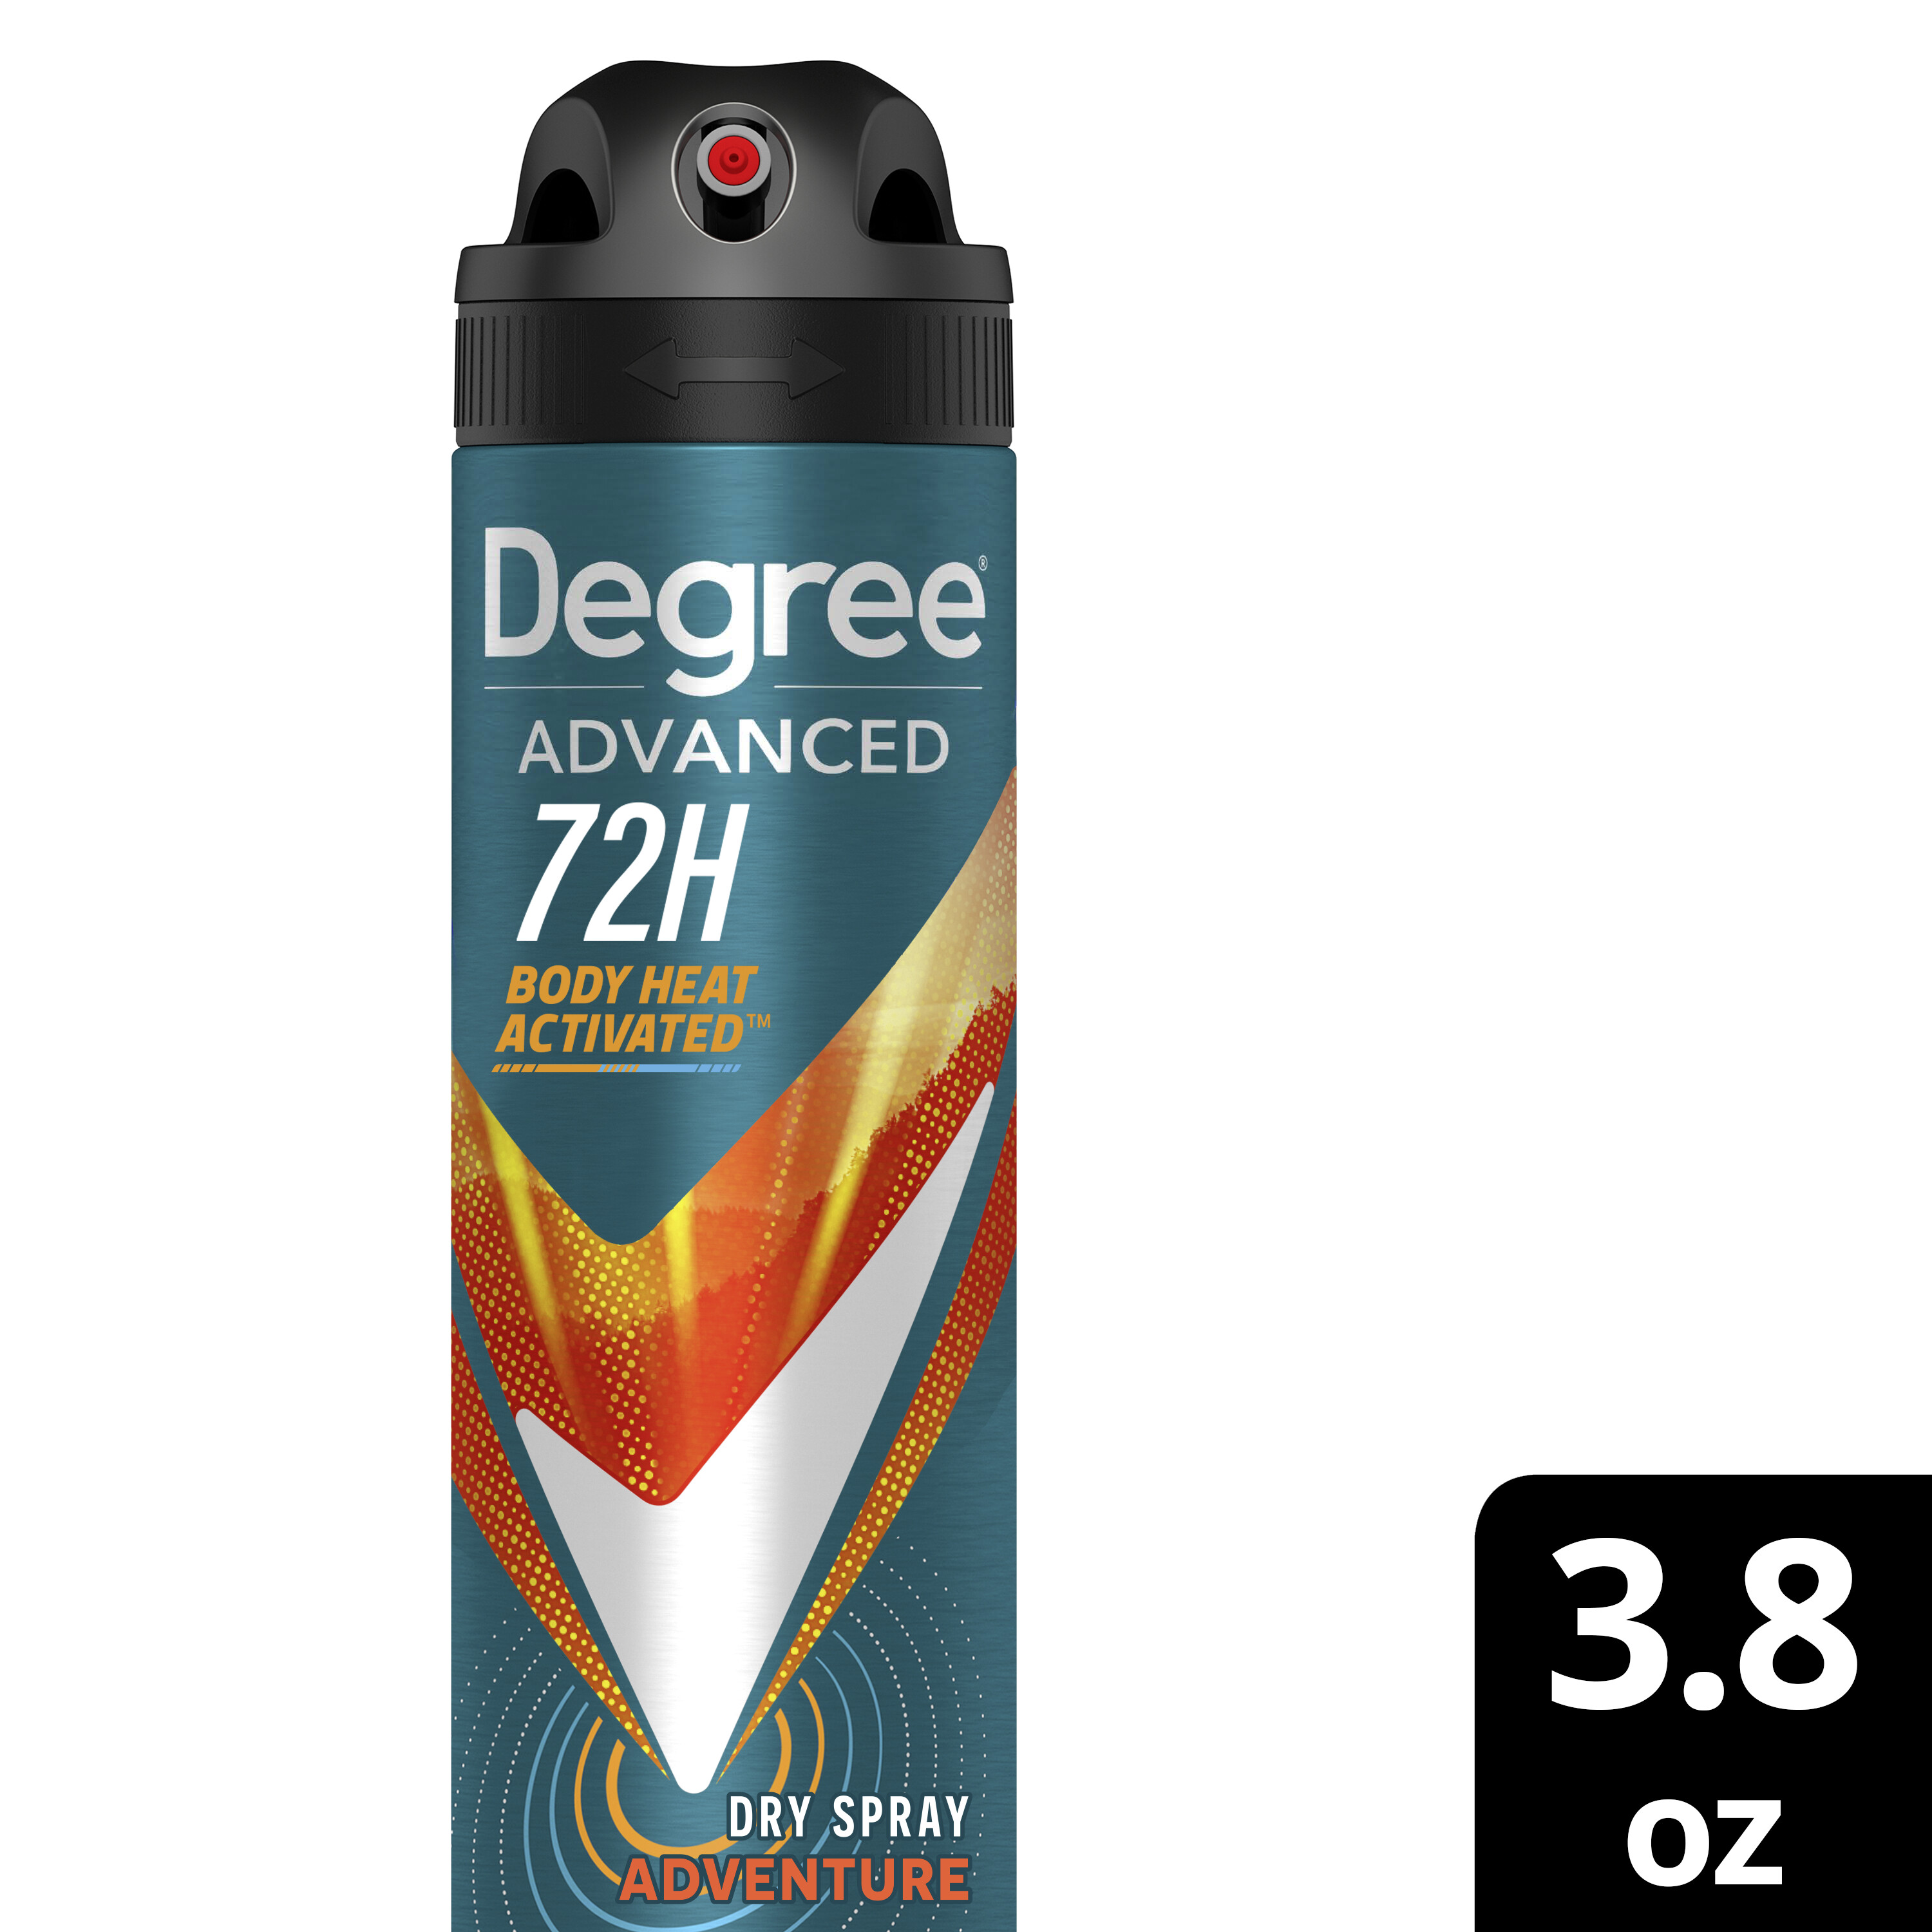 Degree Advanced Long Lasting Men's Antiperspirant Deodorant Dry Spray Adventure, 3.8 oz - image 3 of 7